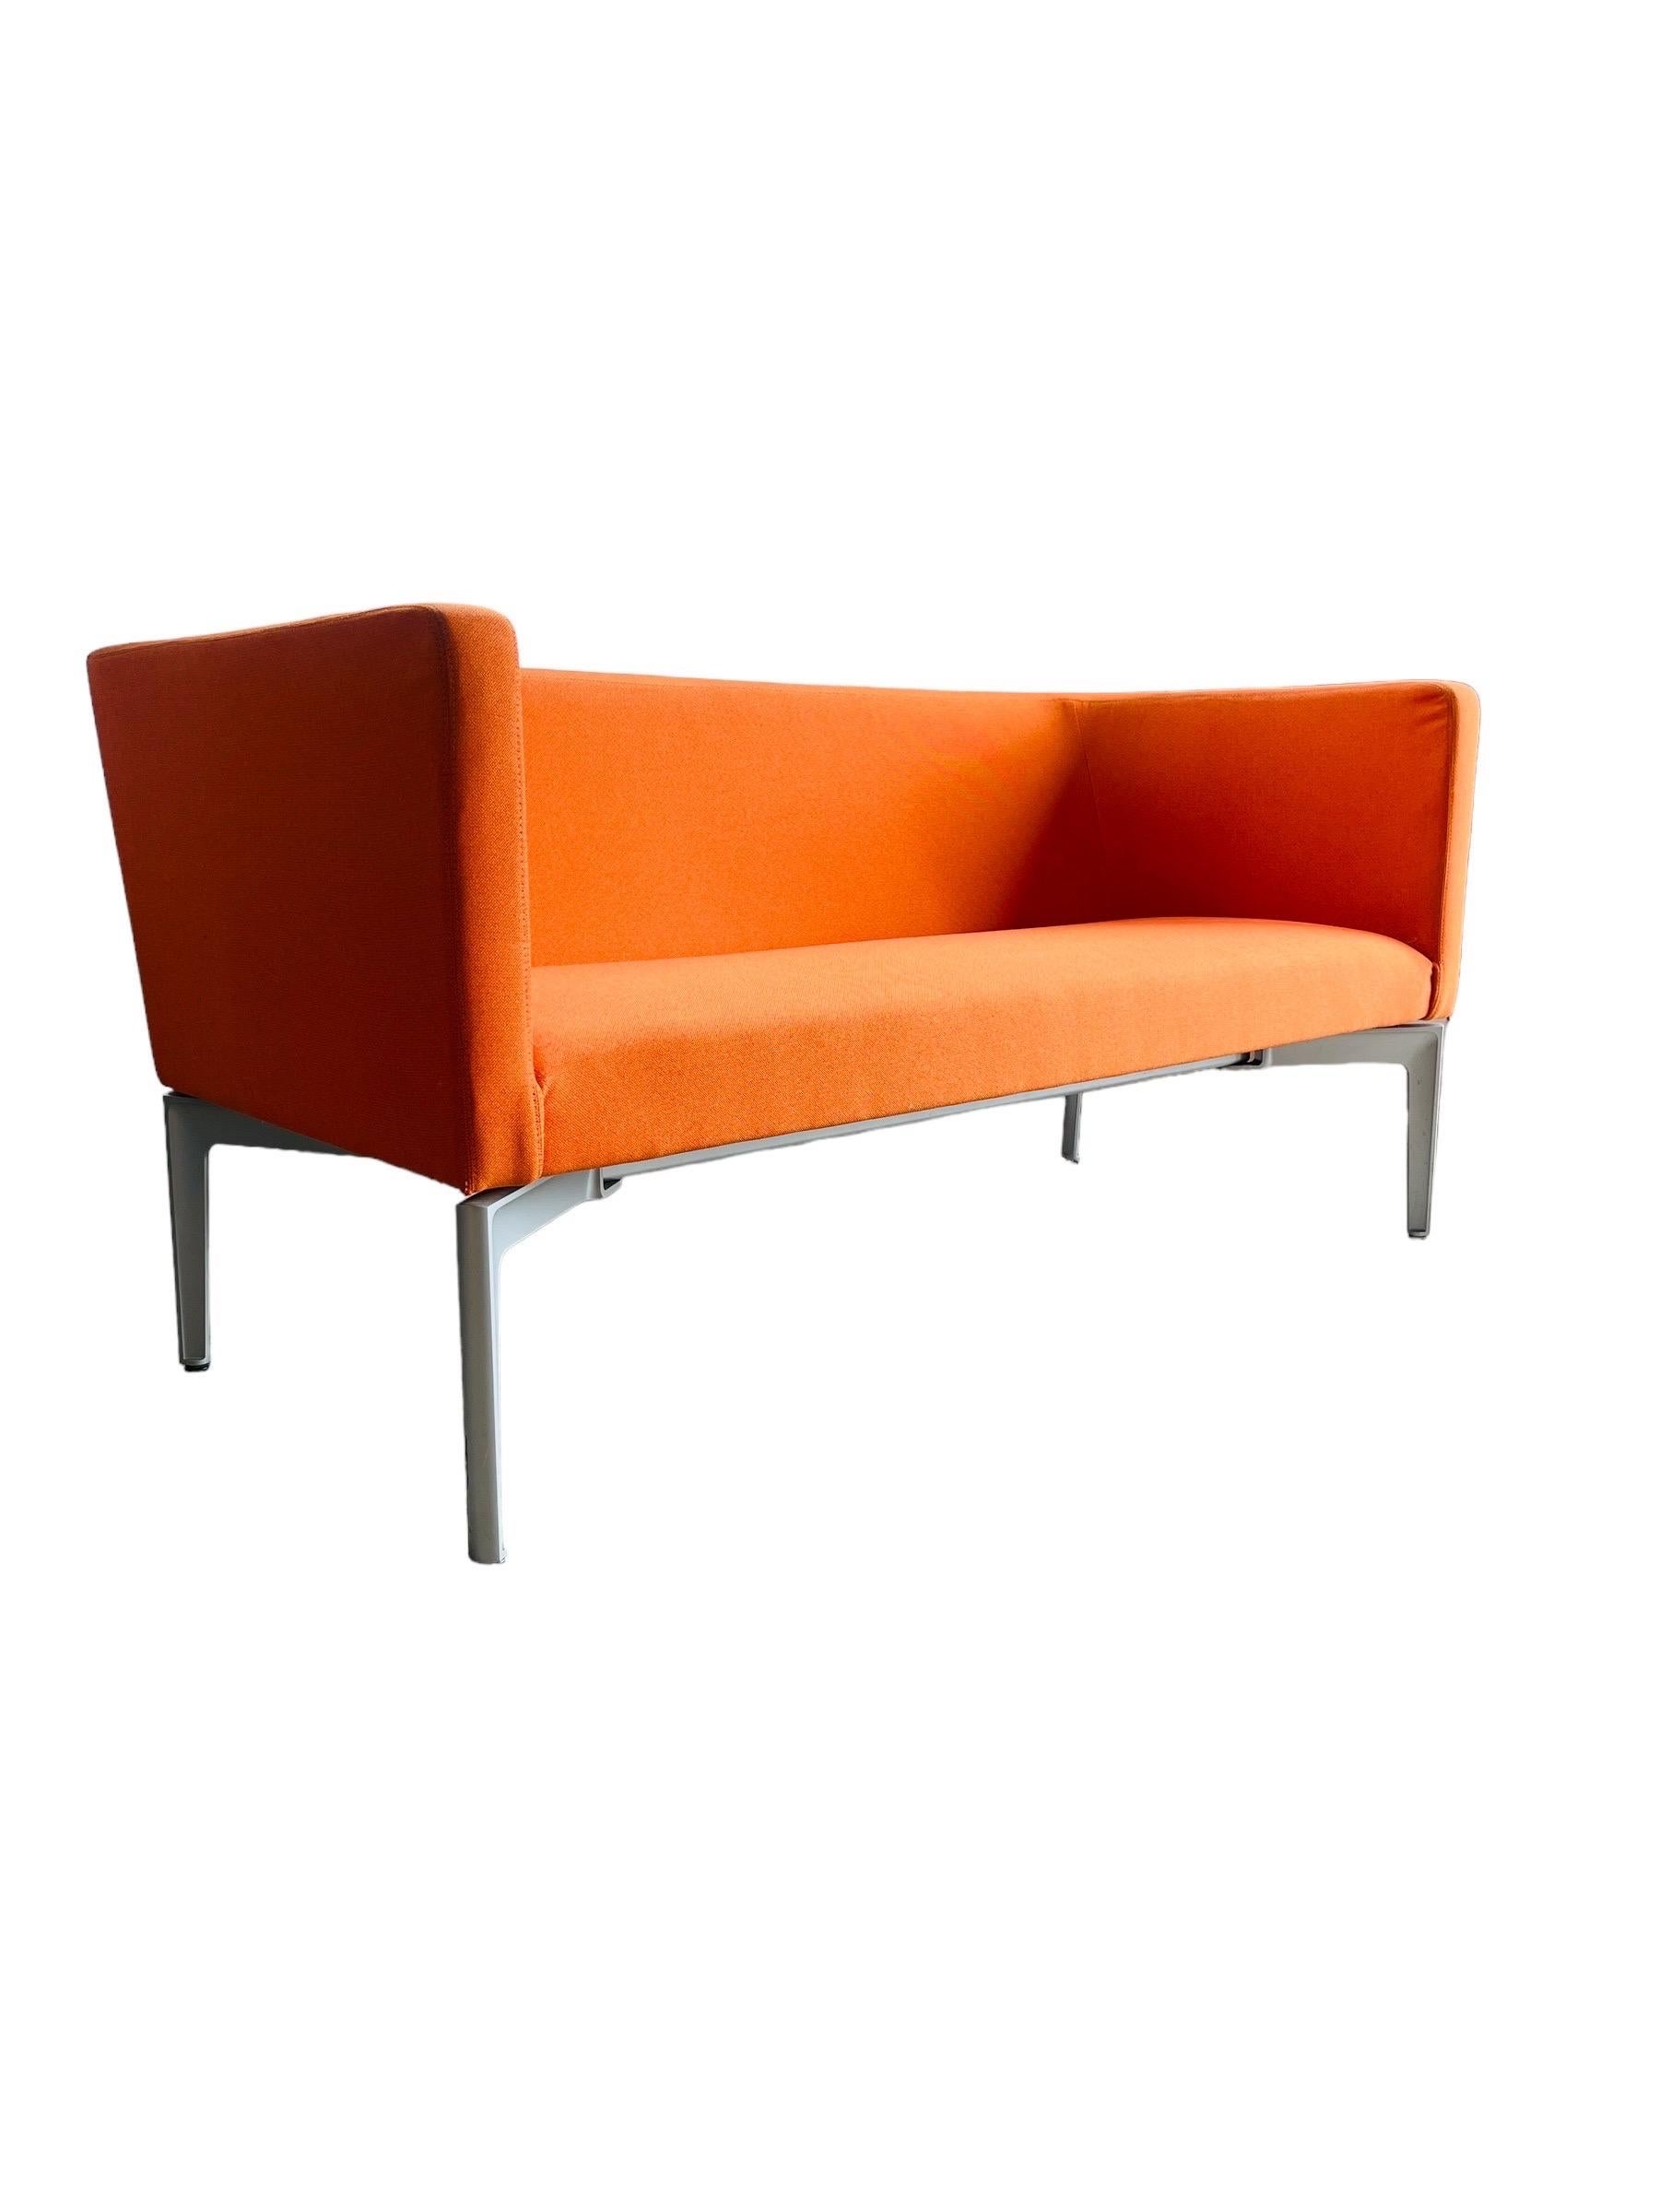 American Steelcase Bivi Rumble Seat Collection: Vibrant Orange Modern Sofa